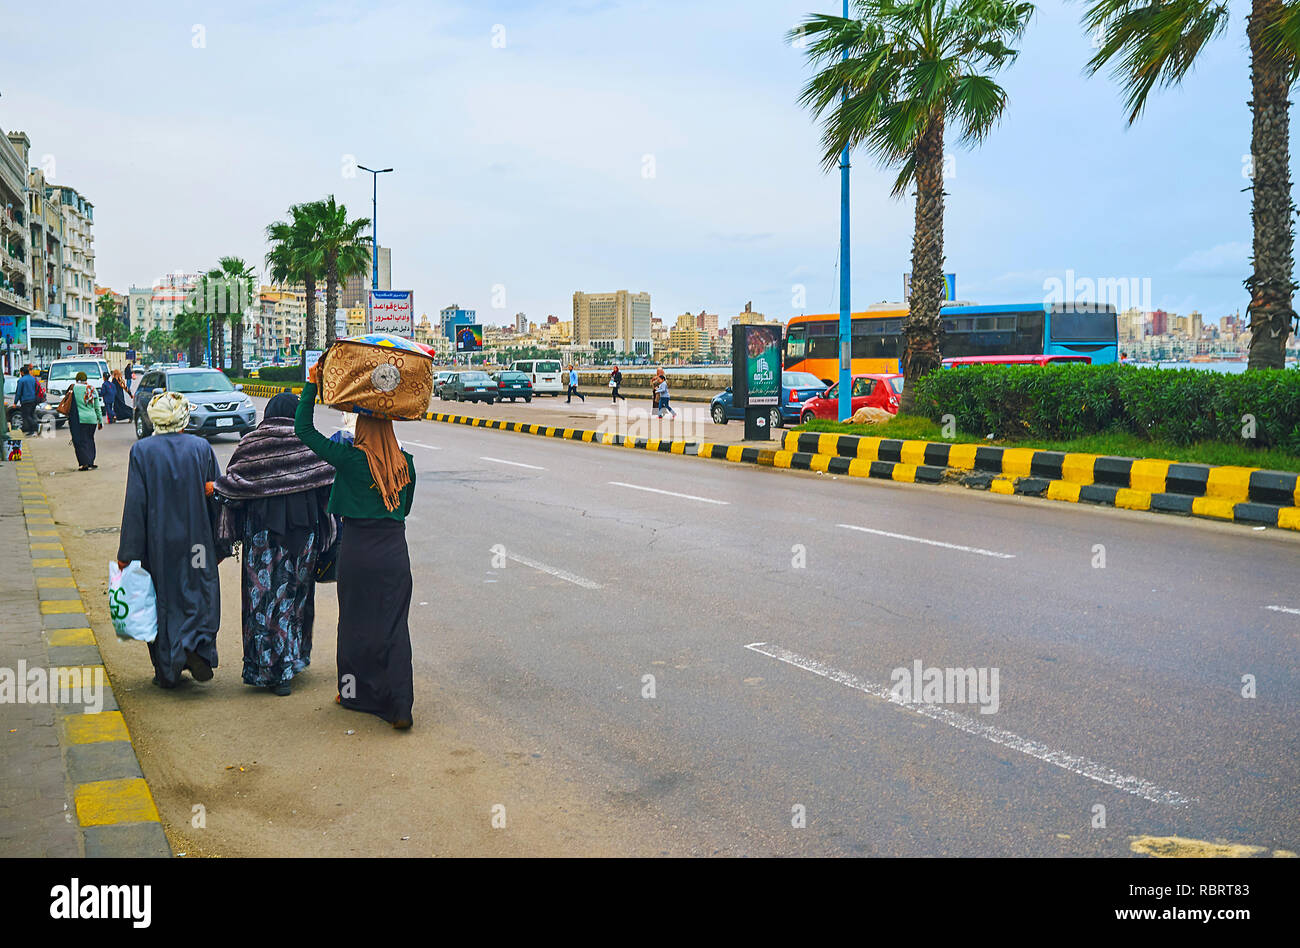 ALEXANDRIA, EGYPT - DECEMBER 19, 2017: Chaotic pedestrian movement along the road in Corniche Avenue, on December 19 in Alexandria. Stock Photo